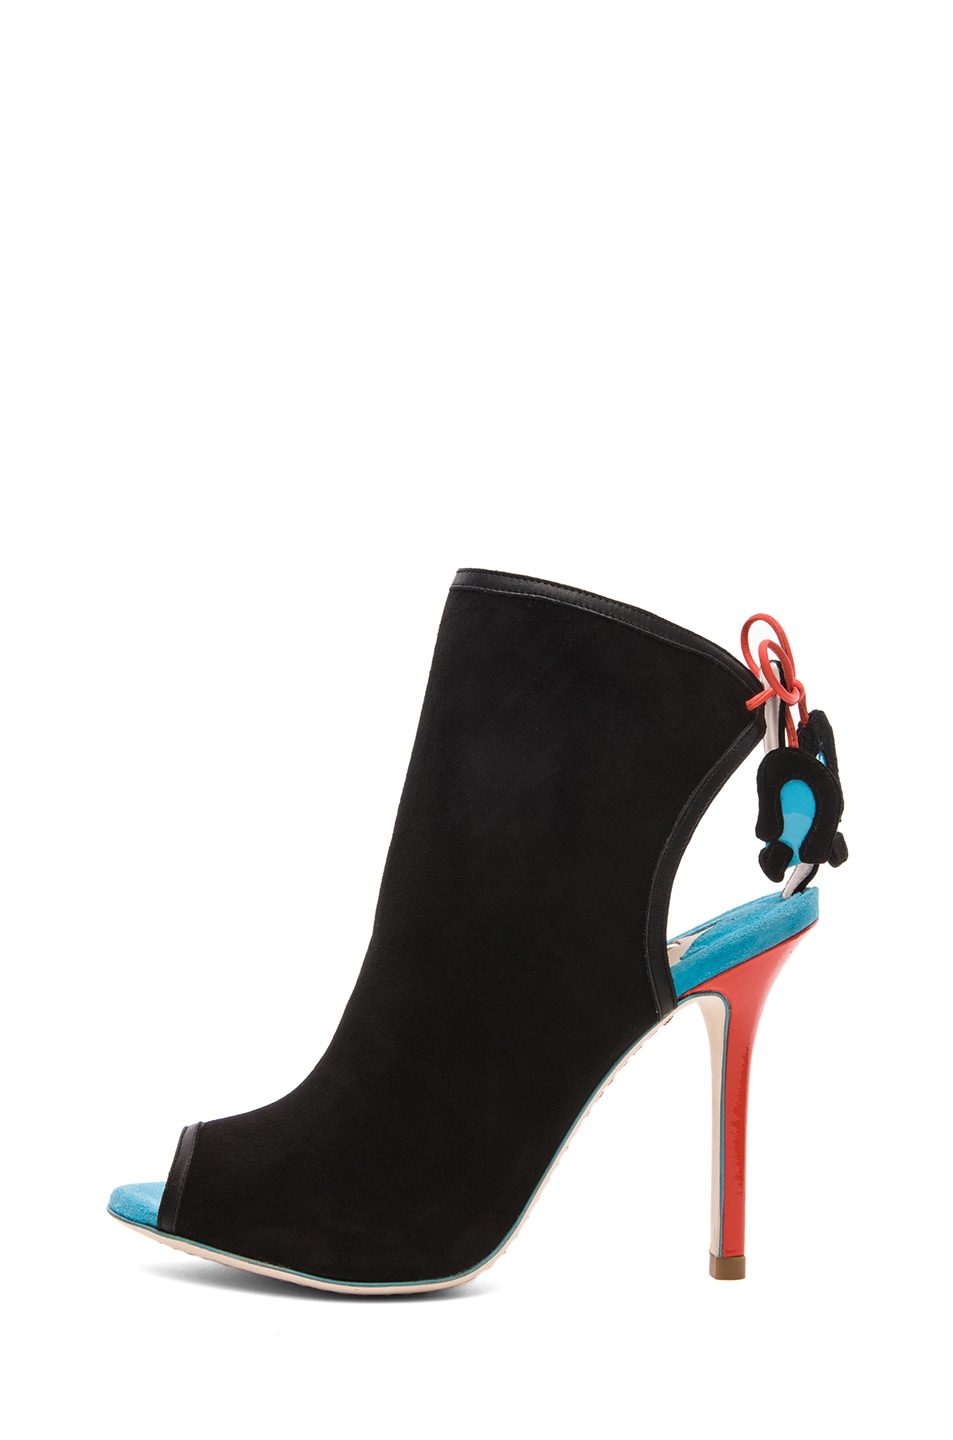 Image 1 of Sophia Webster Tali Suede Peep Toe Ankle Boot in Black Suede & Turquoise & Mandarin Red